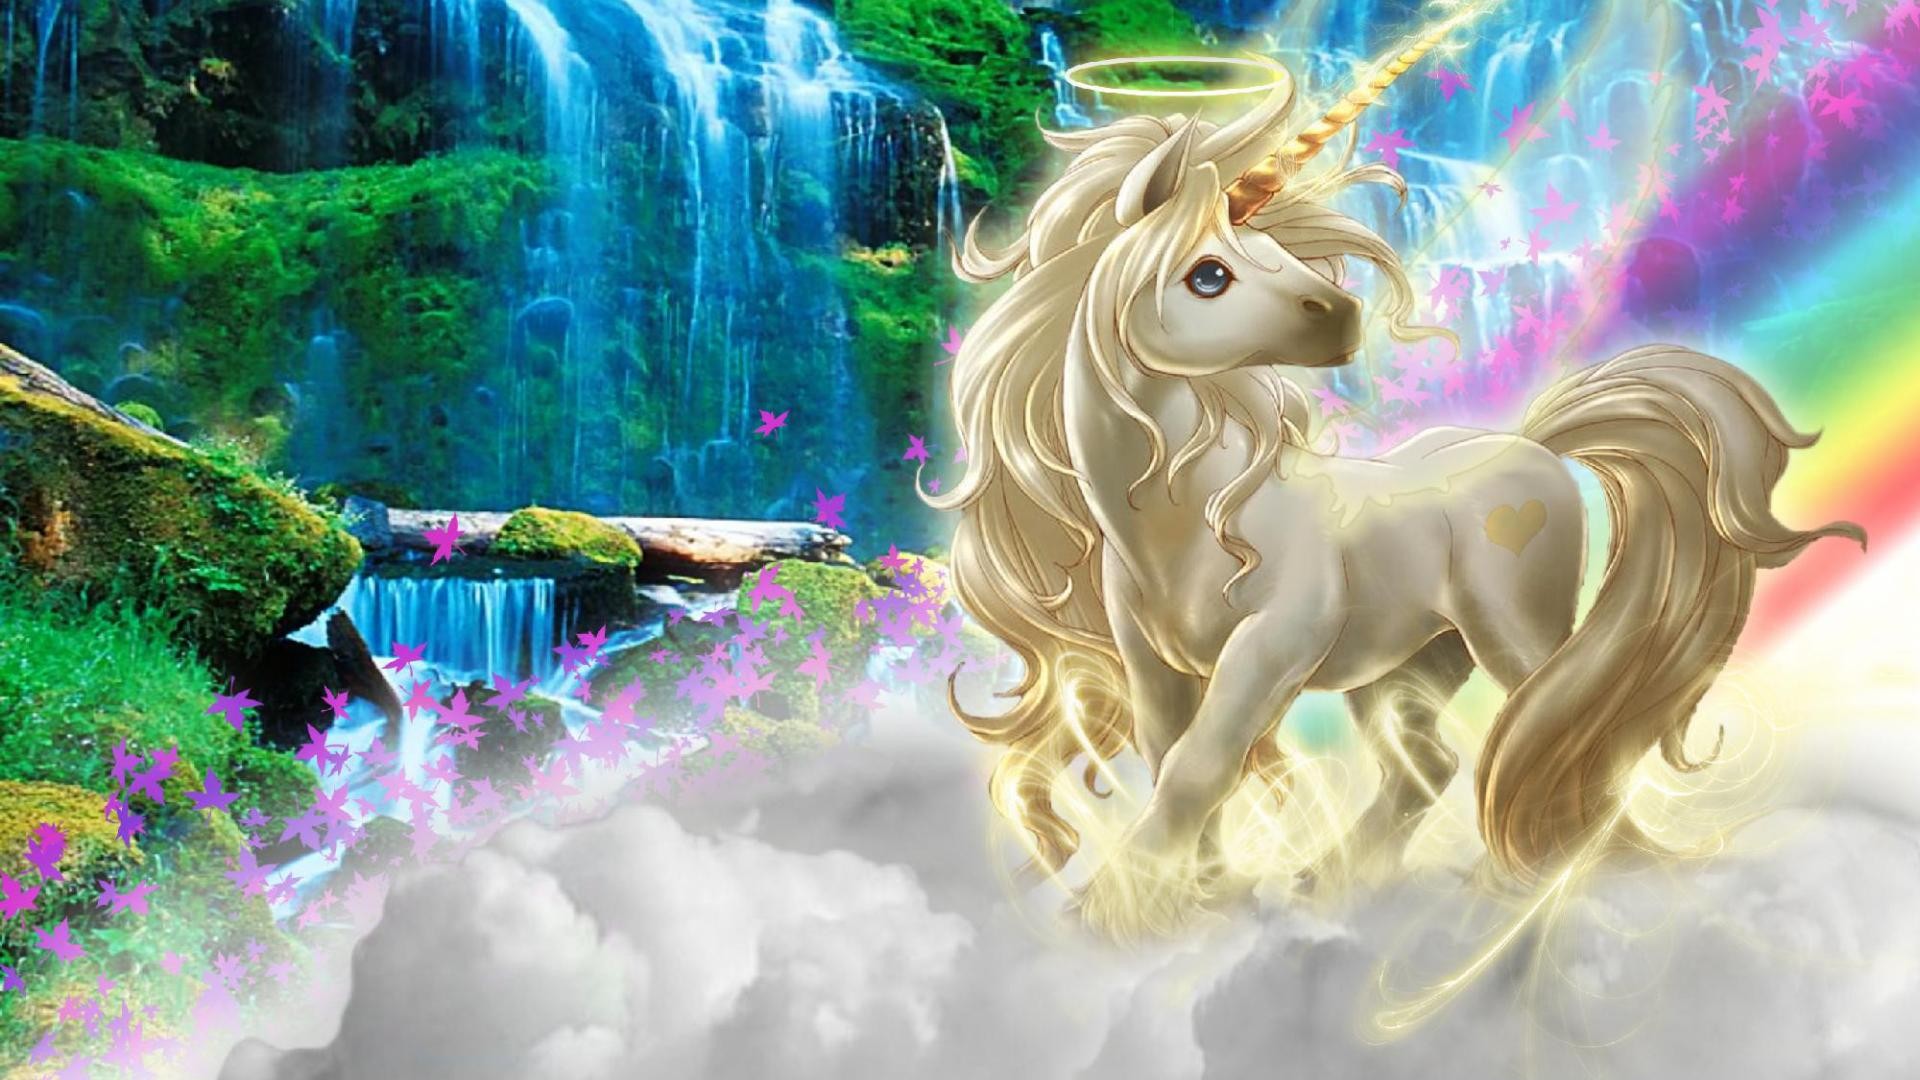 Cute Girly Unicorn Desktop Backgrounds Hd 2020 Cute Wallpapers